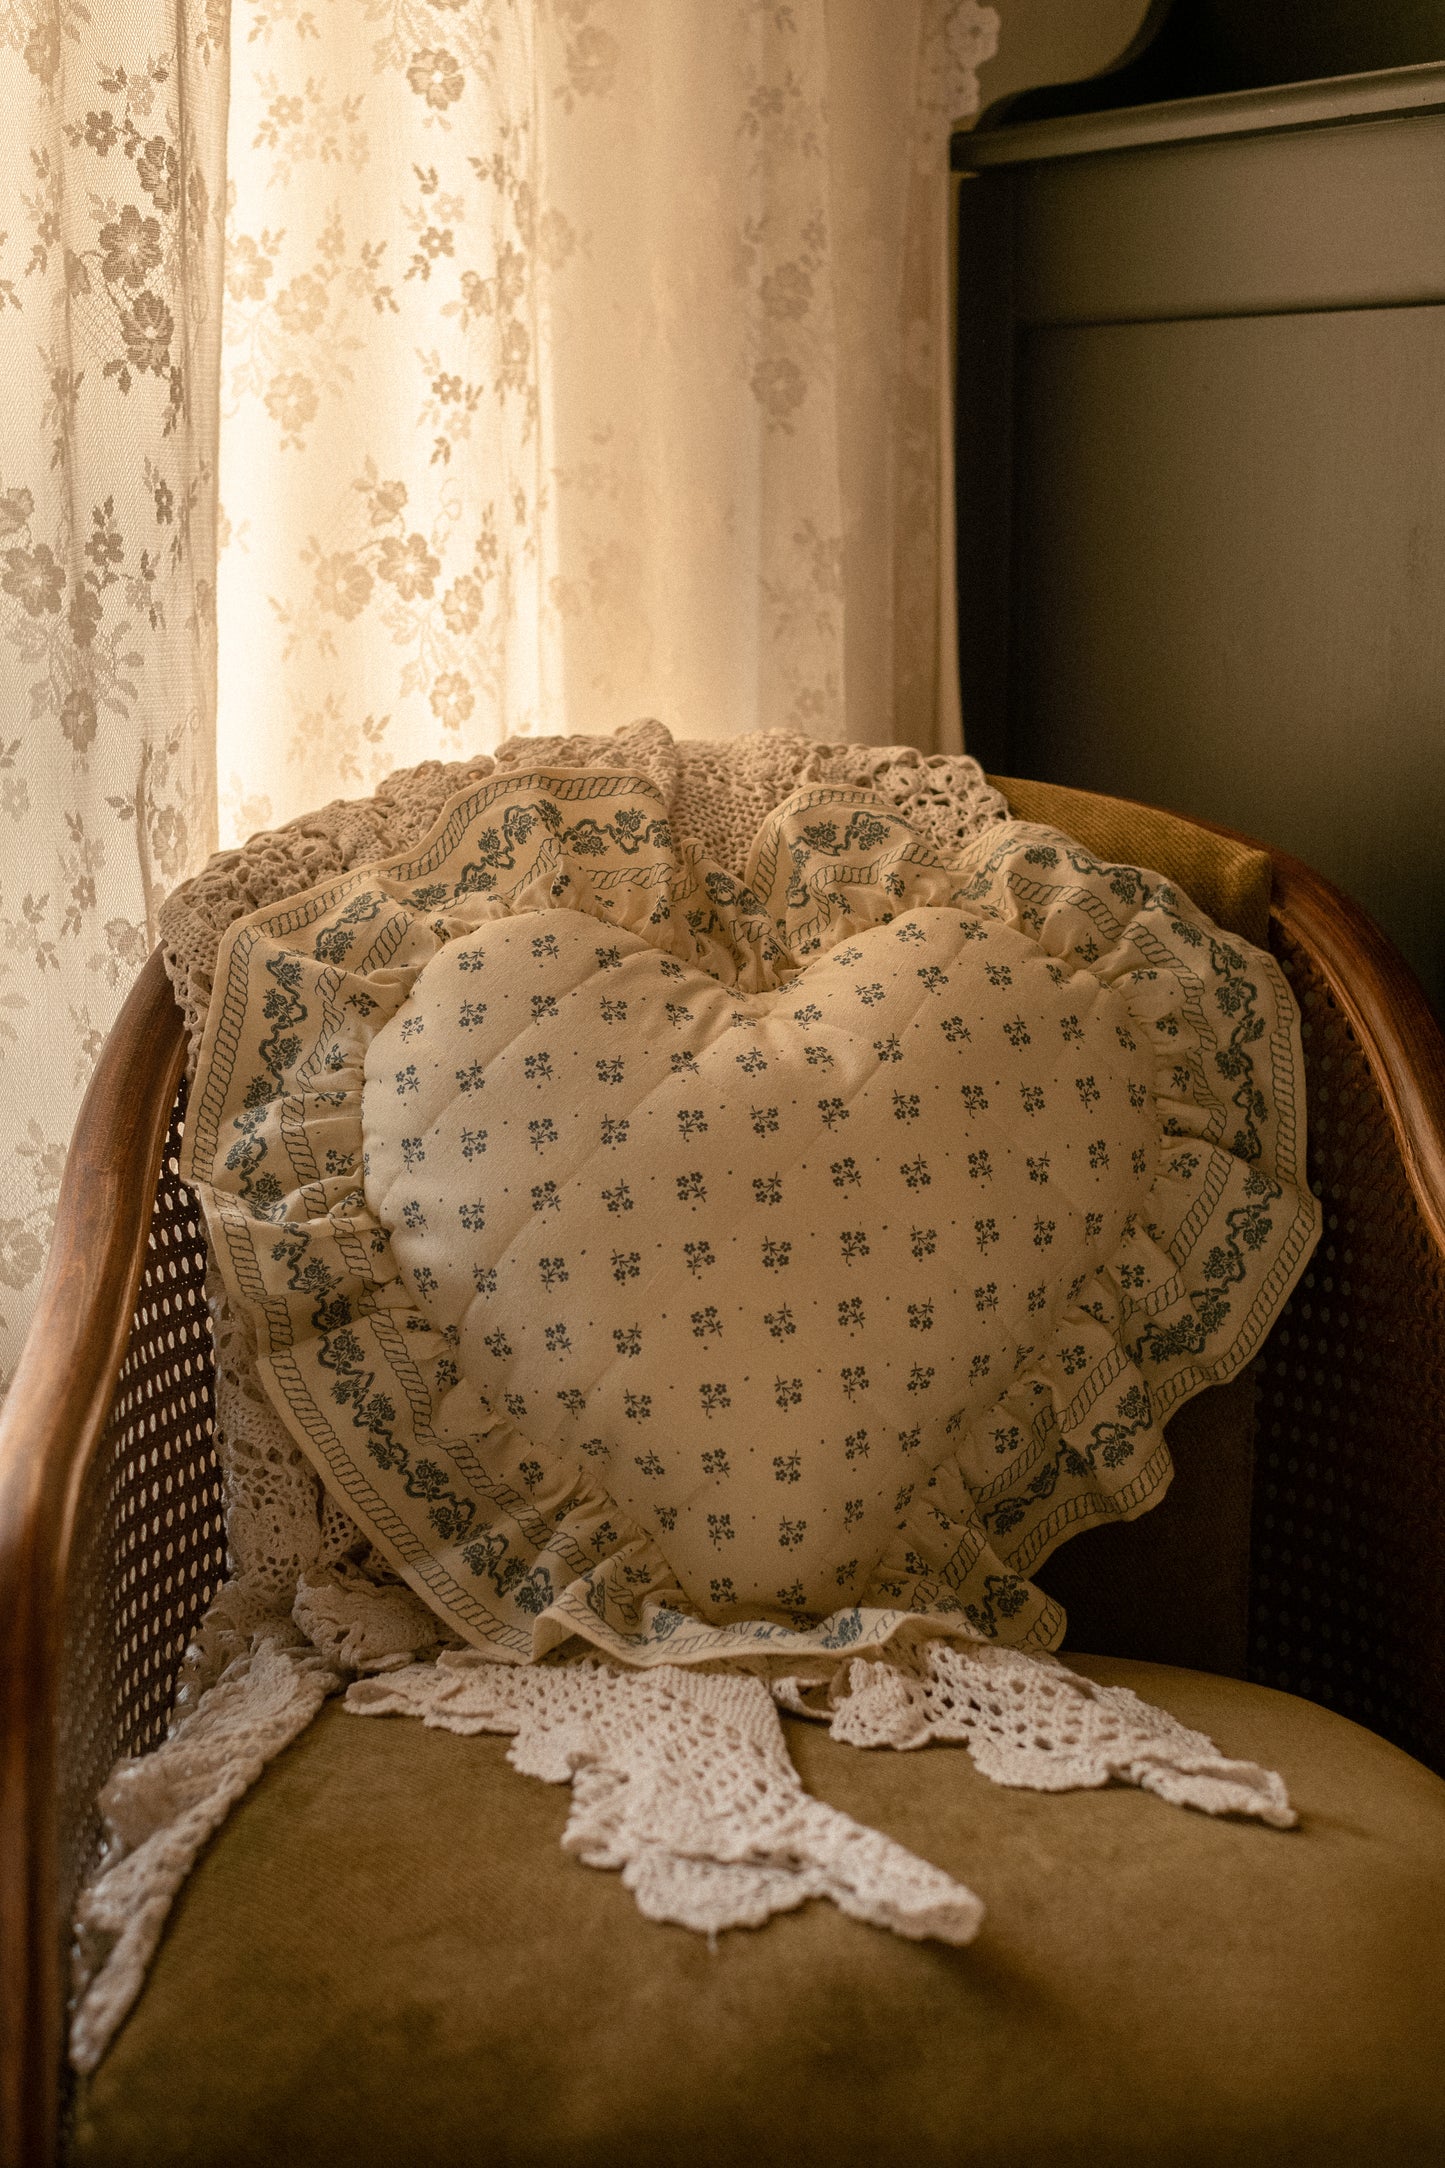 Handmade ruffled heart pillow - Hankie